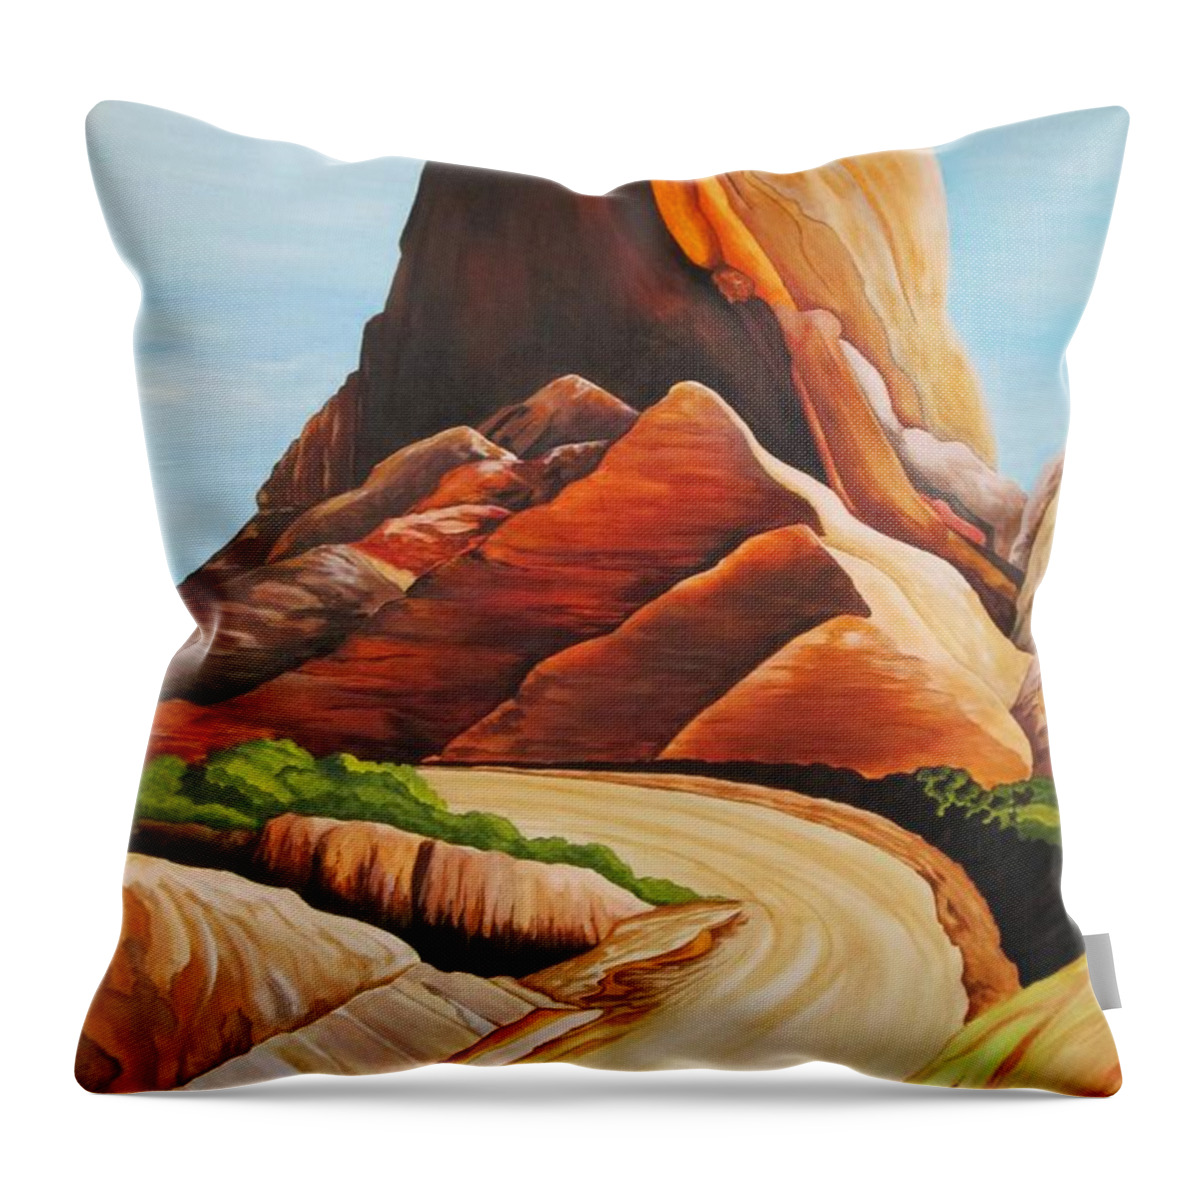 Badlands National Park Throw Pillow featuring the painting Badlands National Park by Carol Sabo